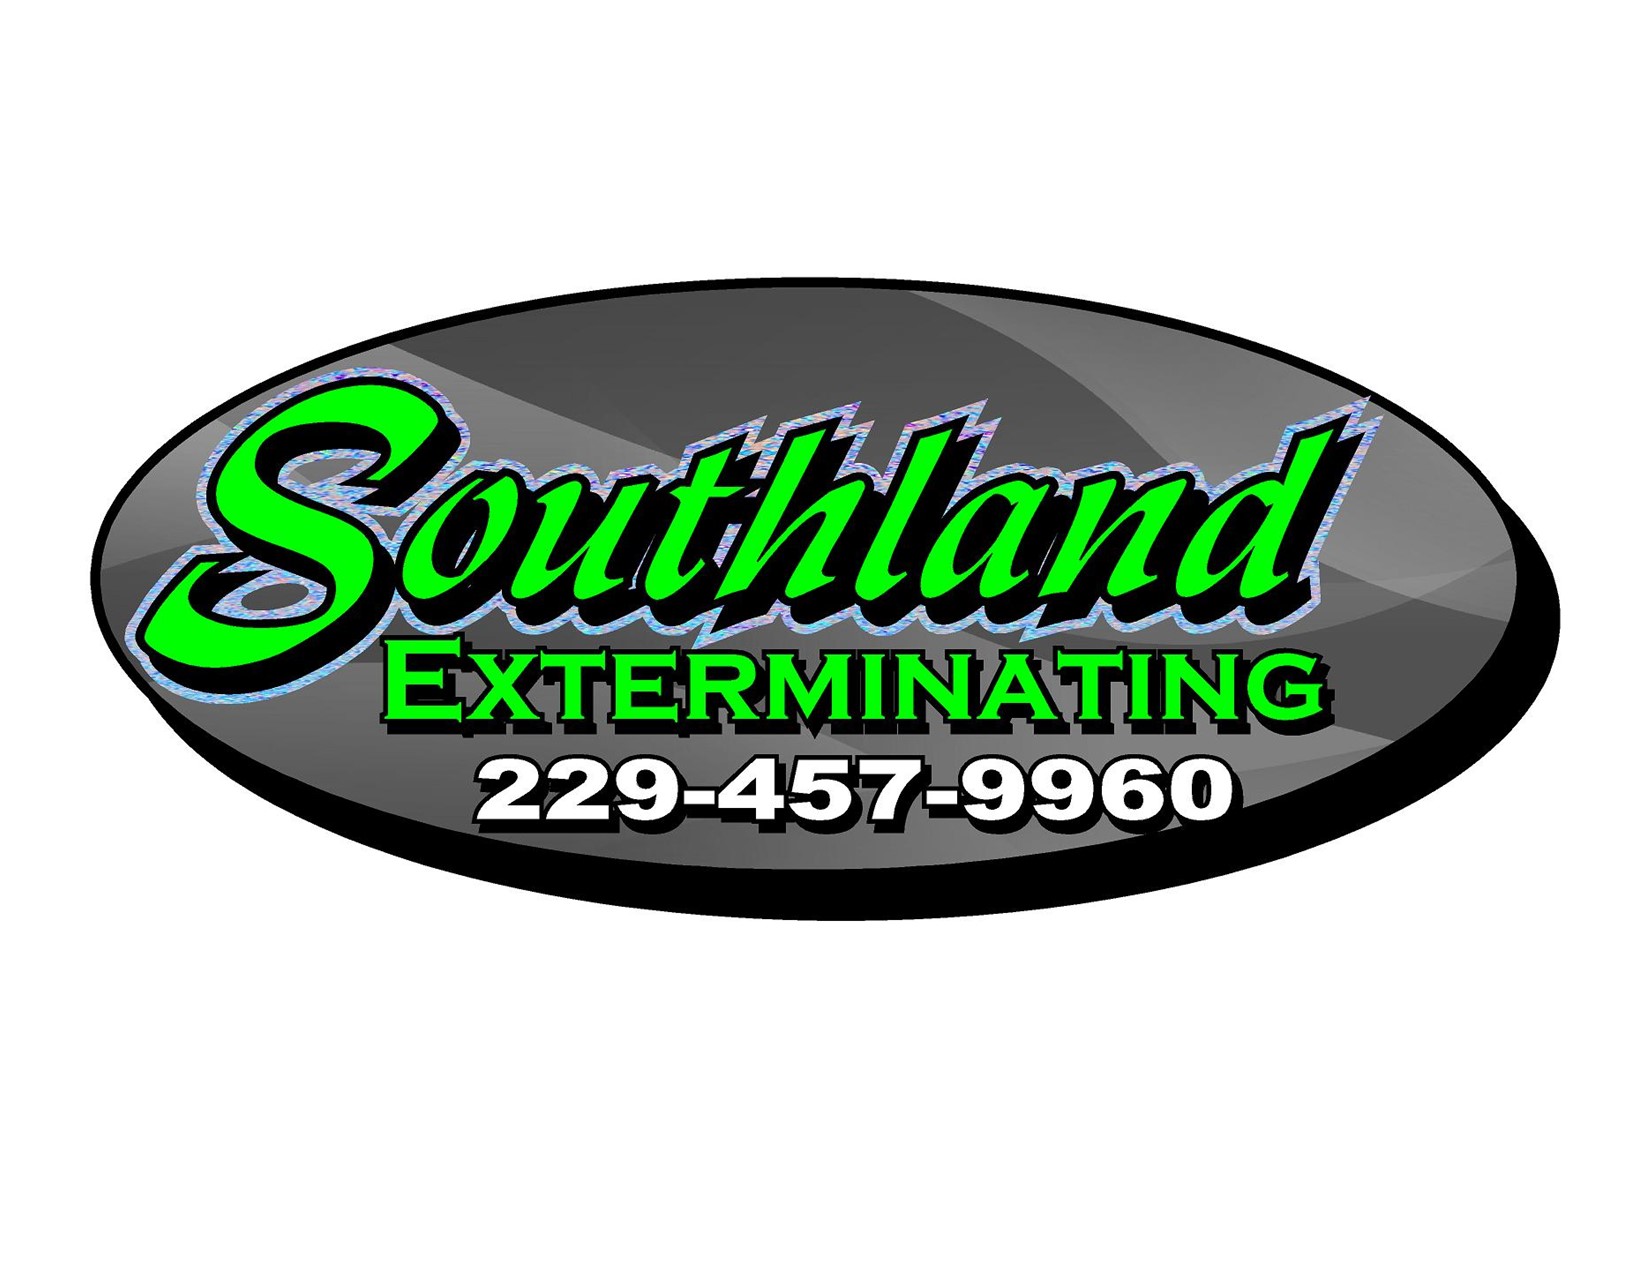 Southland Exterminating